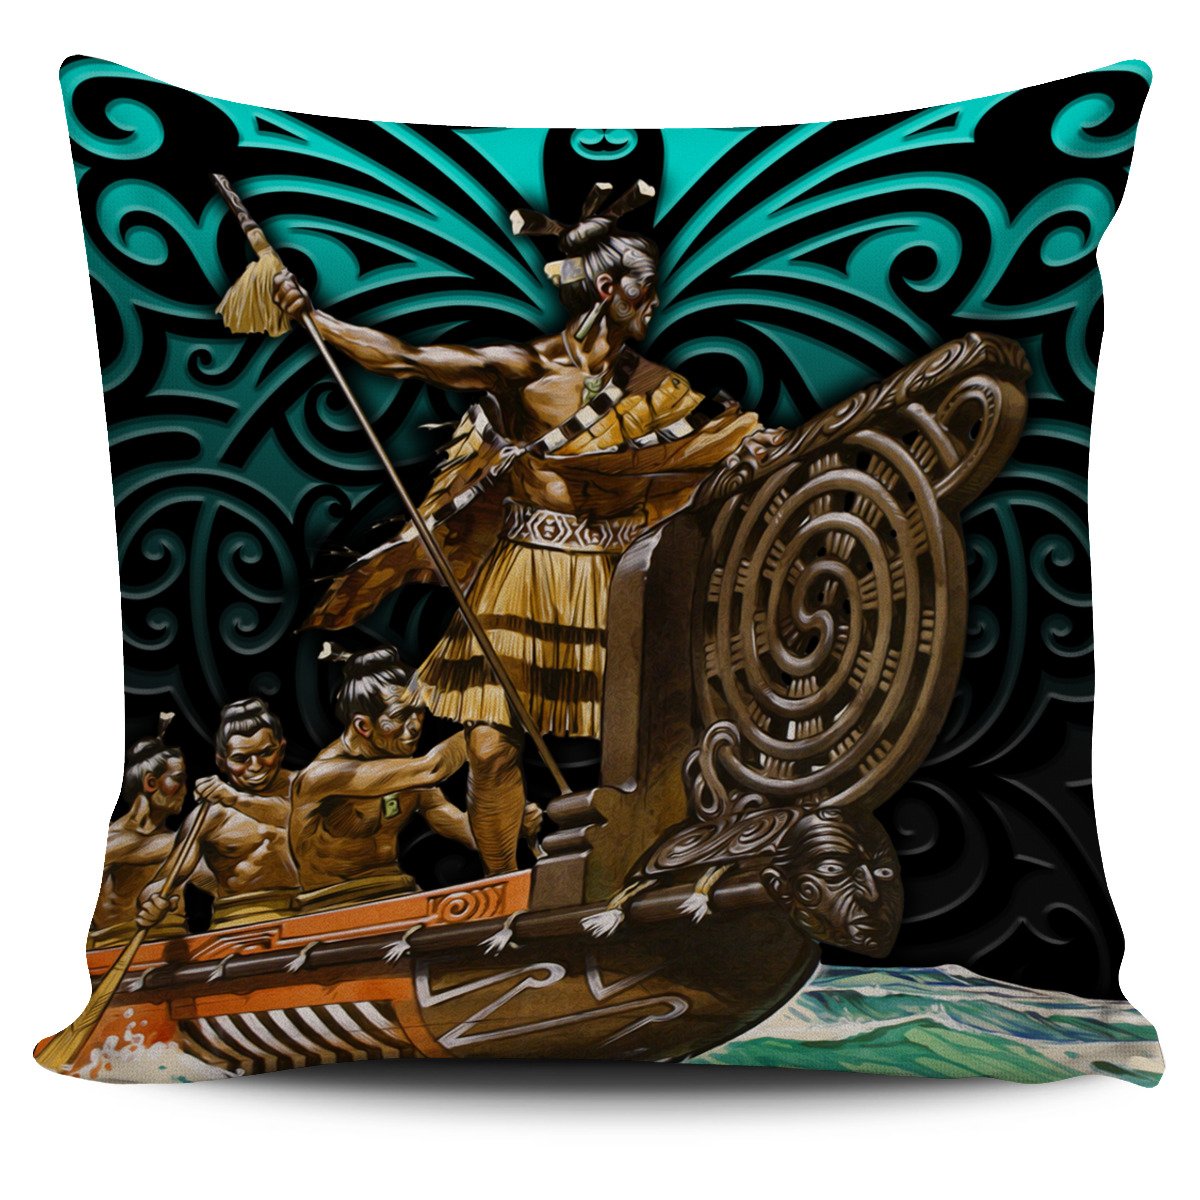 New Zealand Pillow Cover, Maori Waka Taua - Polynesian Pride